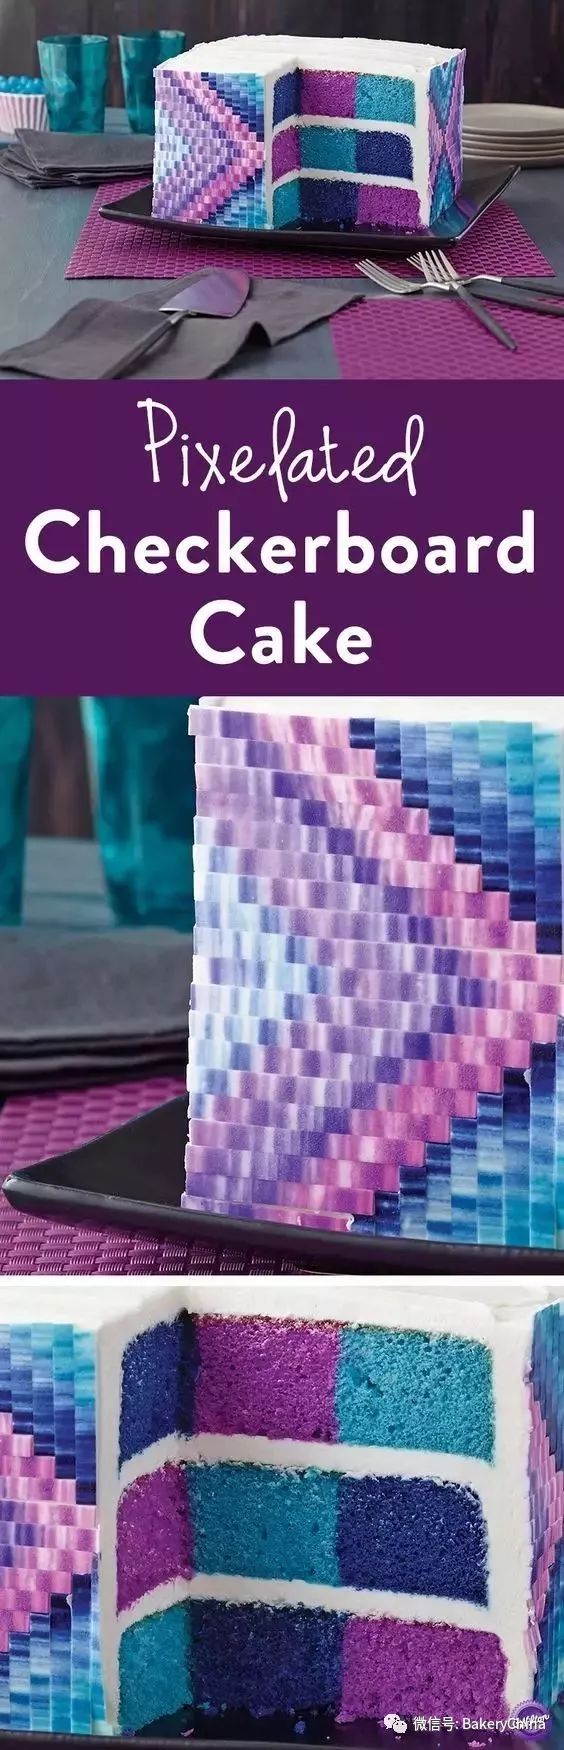 bakerychina,烘焙设备,原辅料,家庭烘焙,彩虹蛋糕